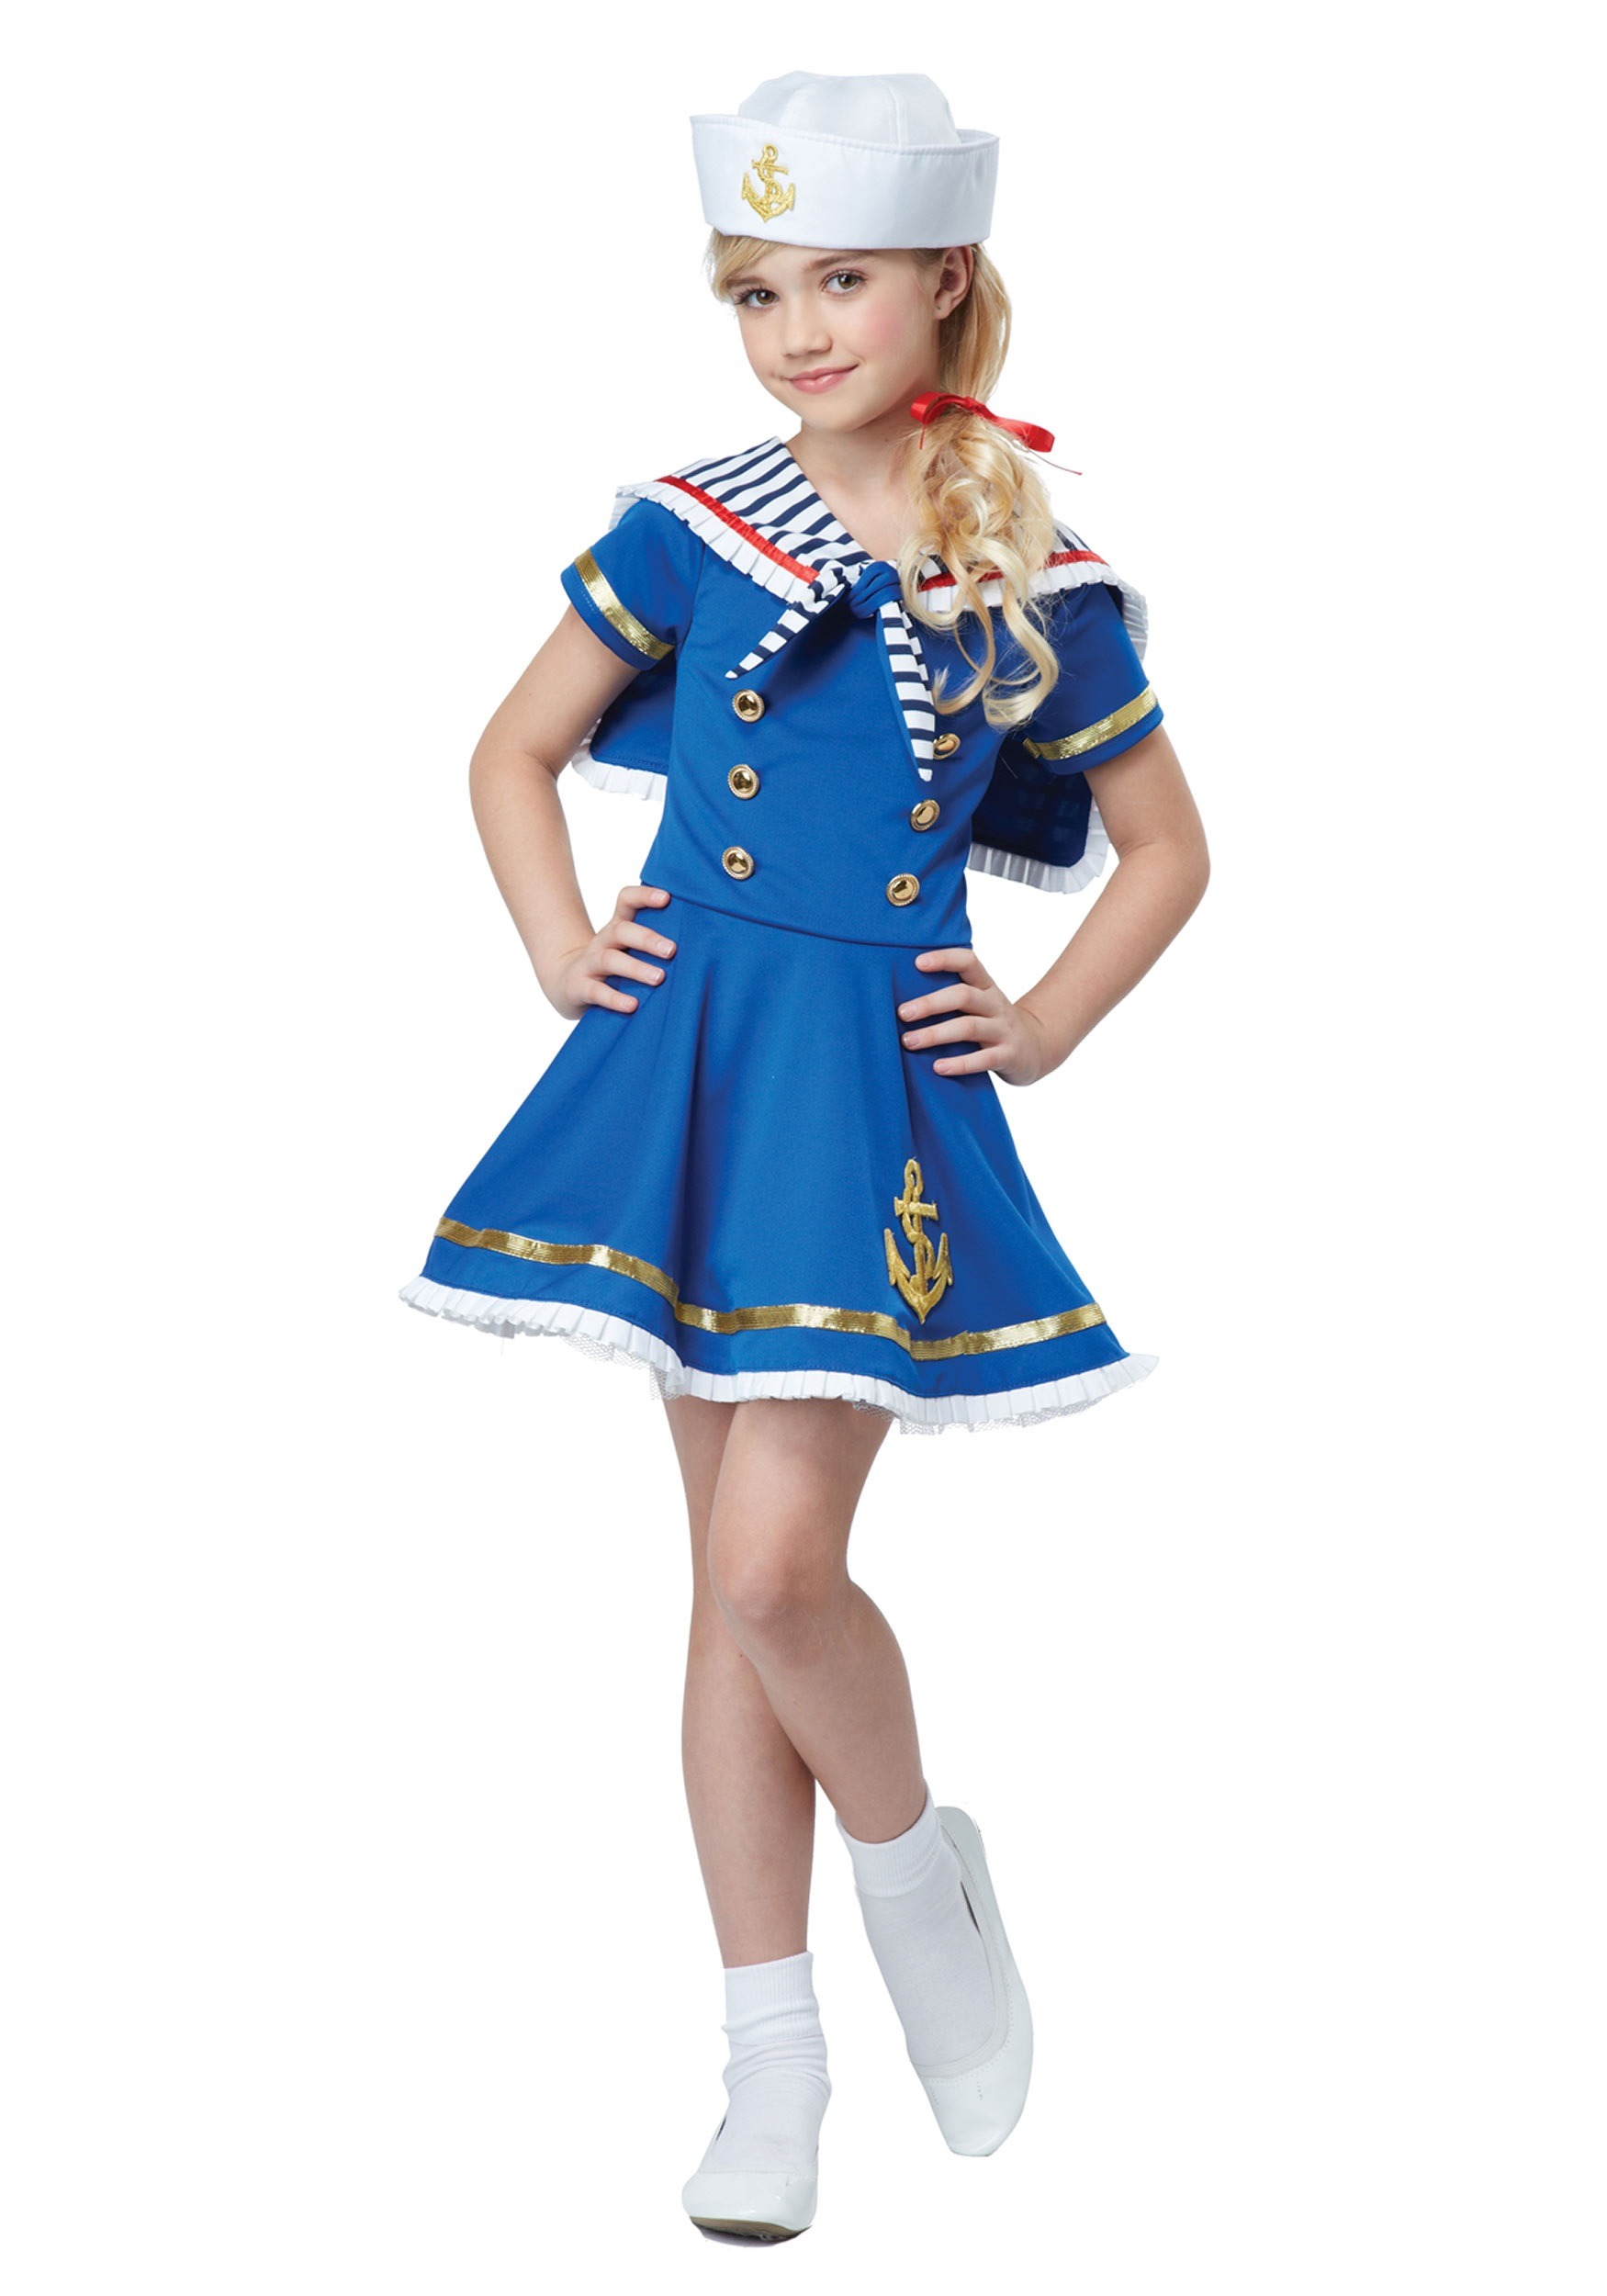 Sailor girl photo